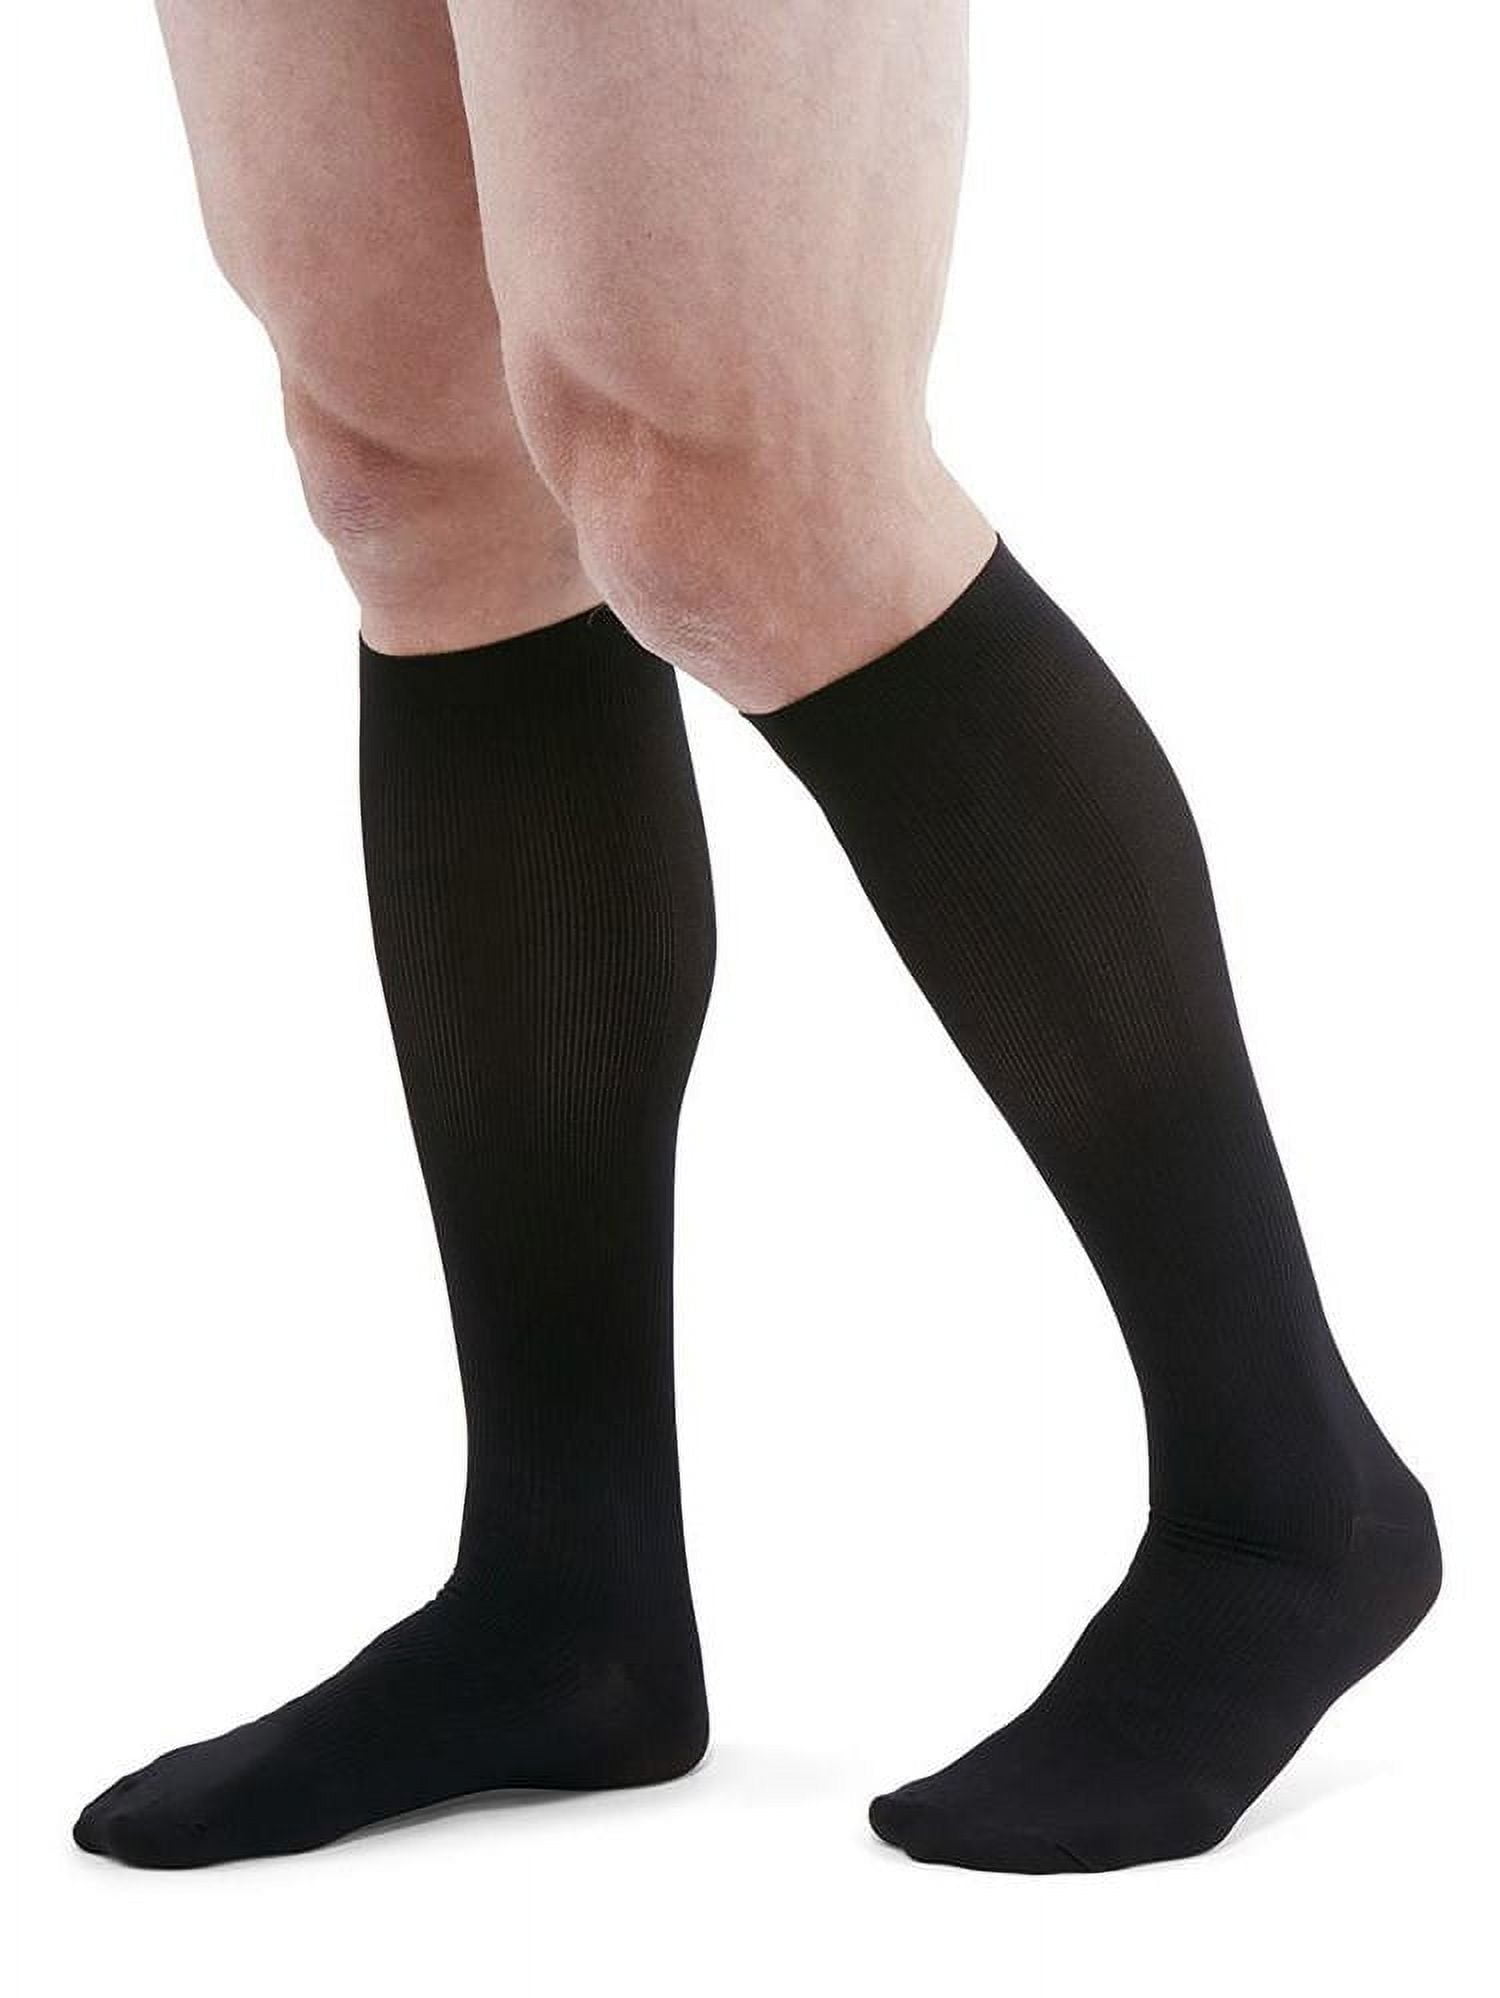 medi for men knee high classic socks - 20-30 mmhg wide tall wide tall ...